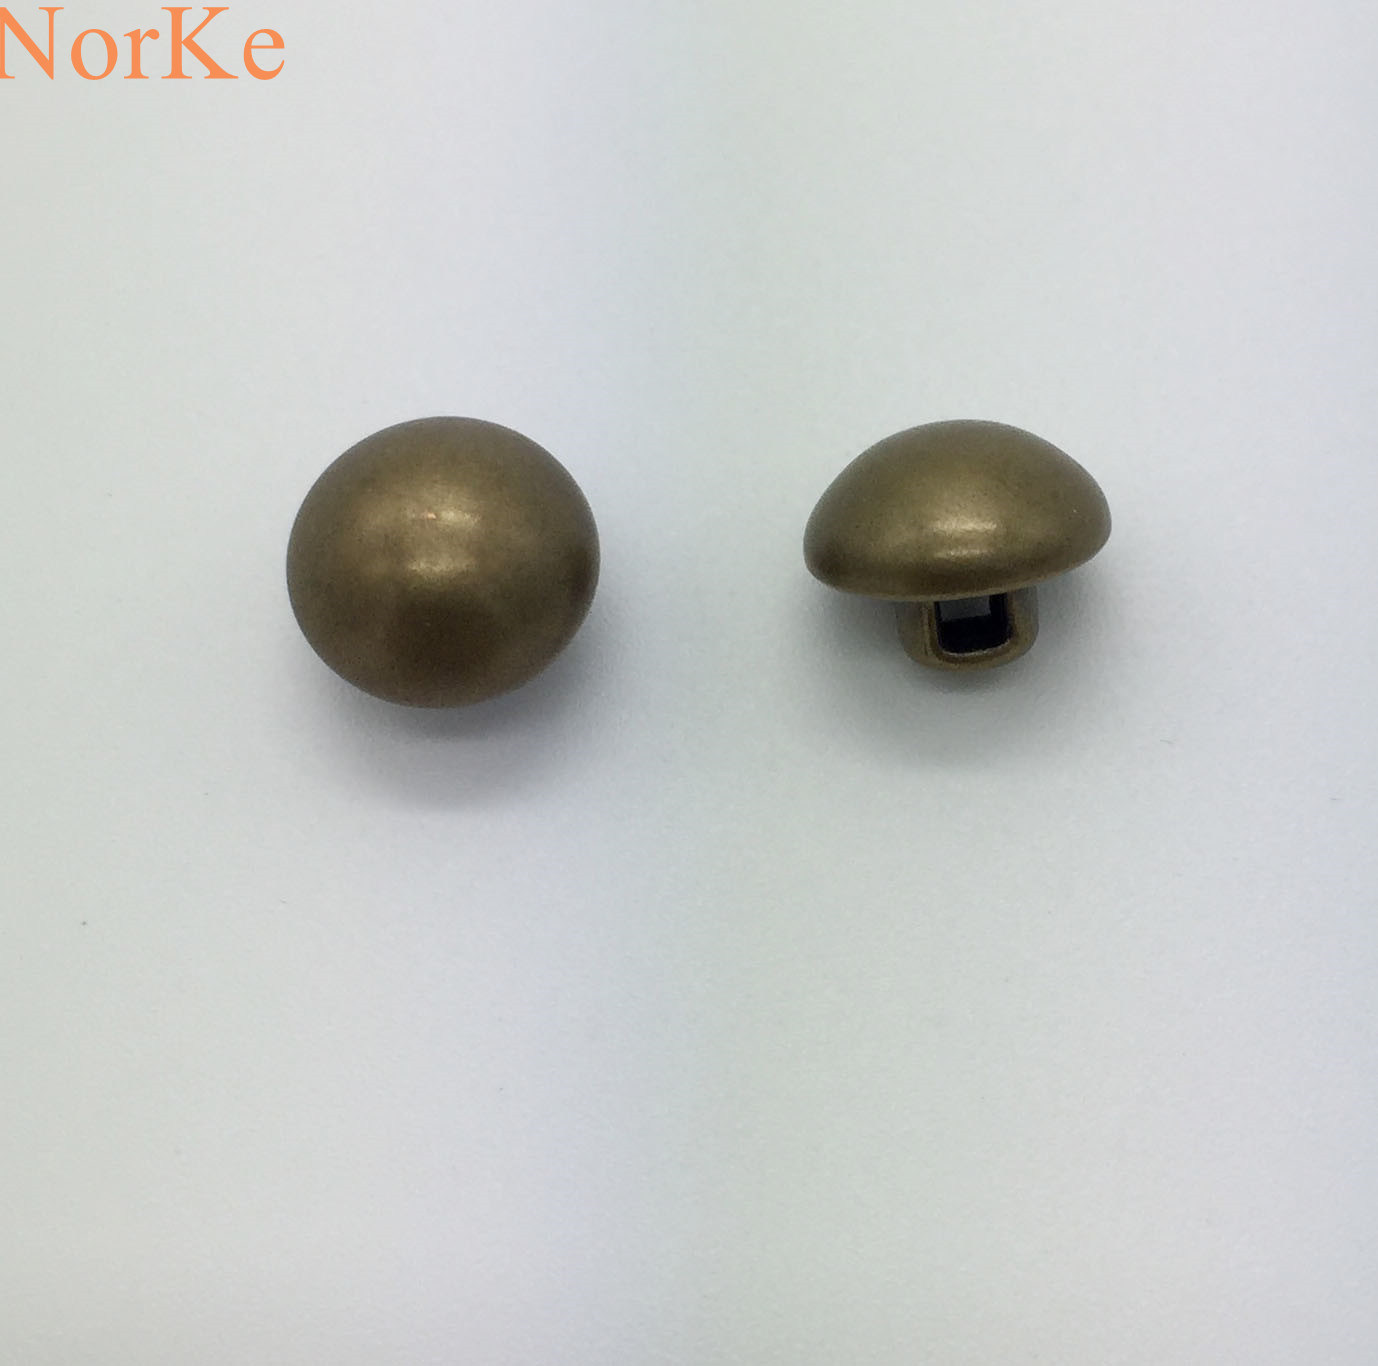 Sewing Mushroom Metal Button Brass Quality